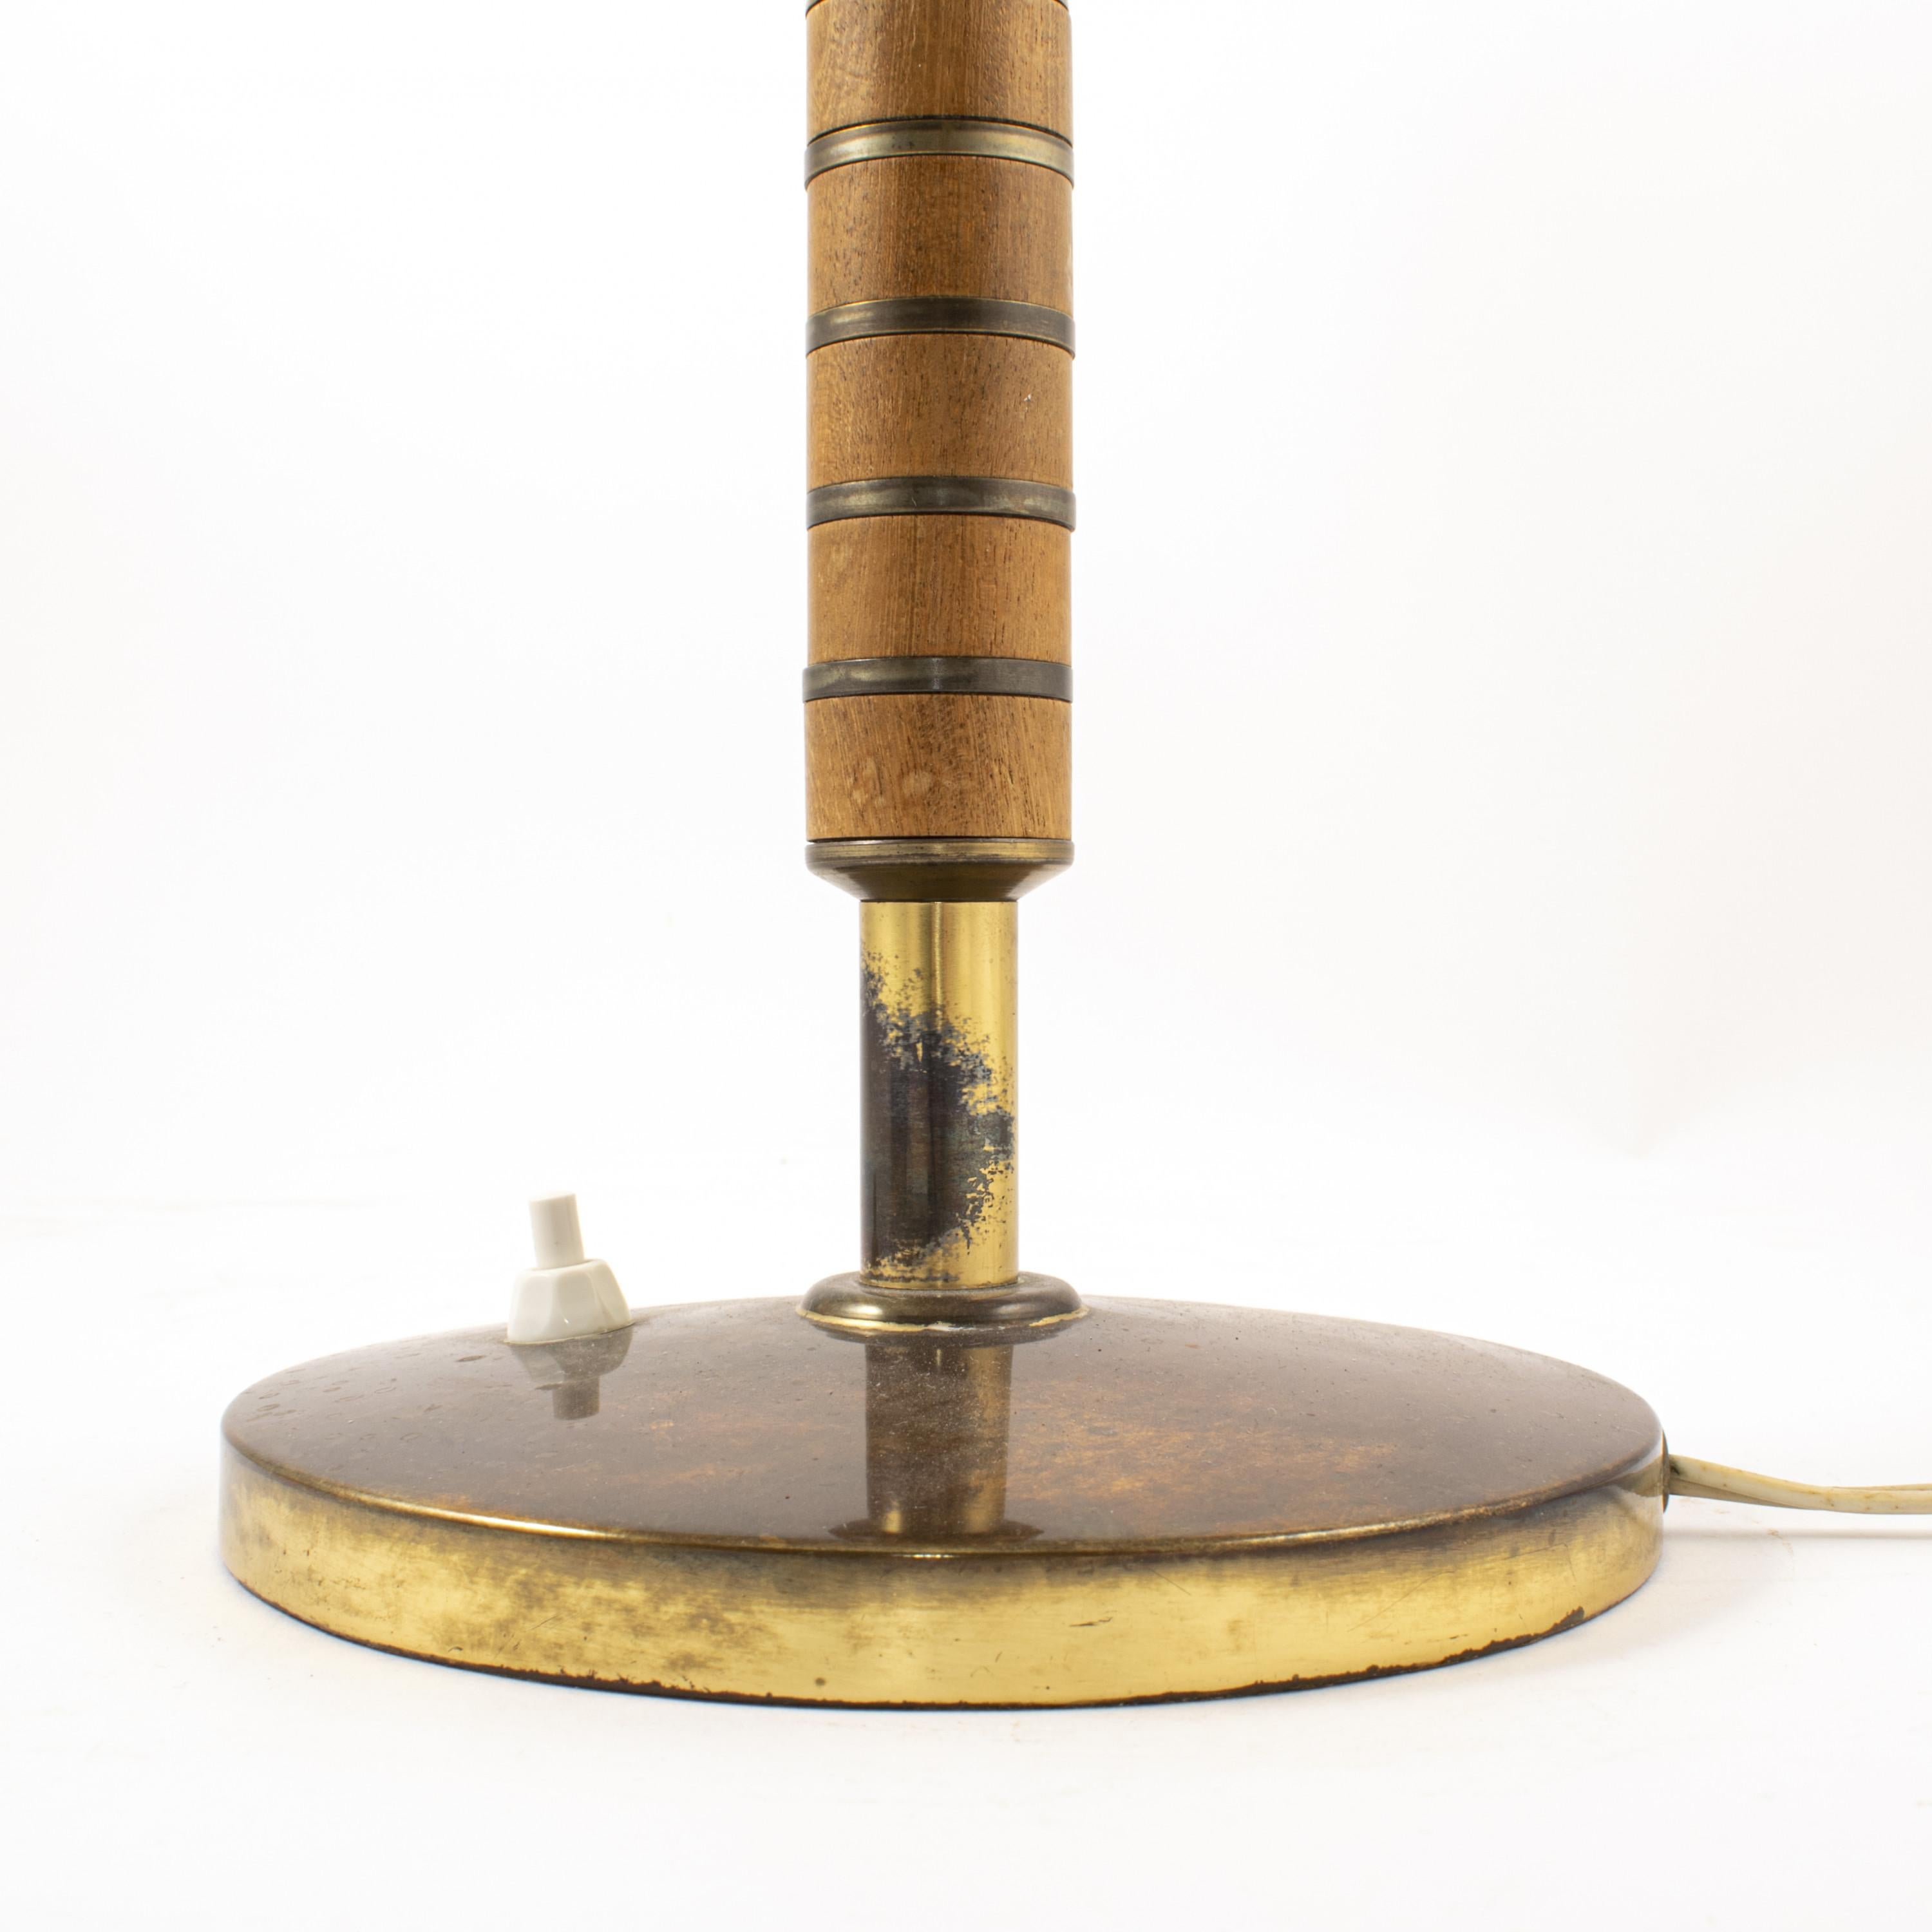 Scandinavian Modern Table Lamp from Lyfa Designed by Bent Karlby, circa 1956